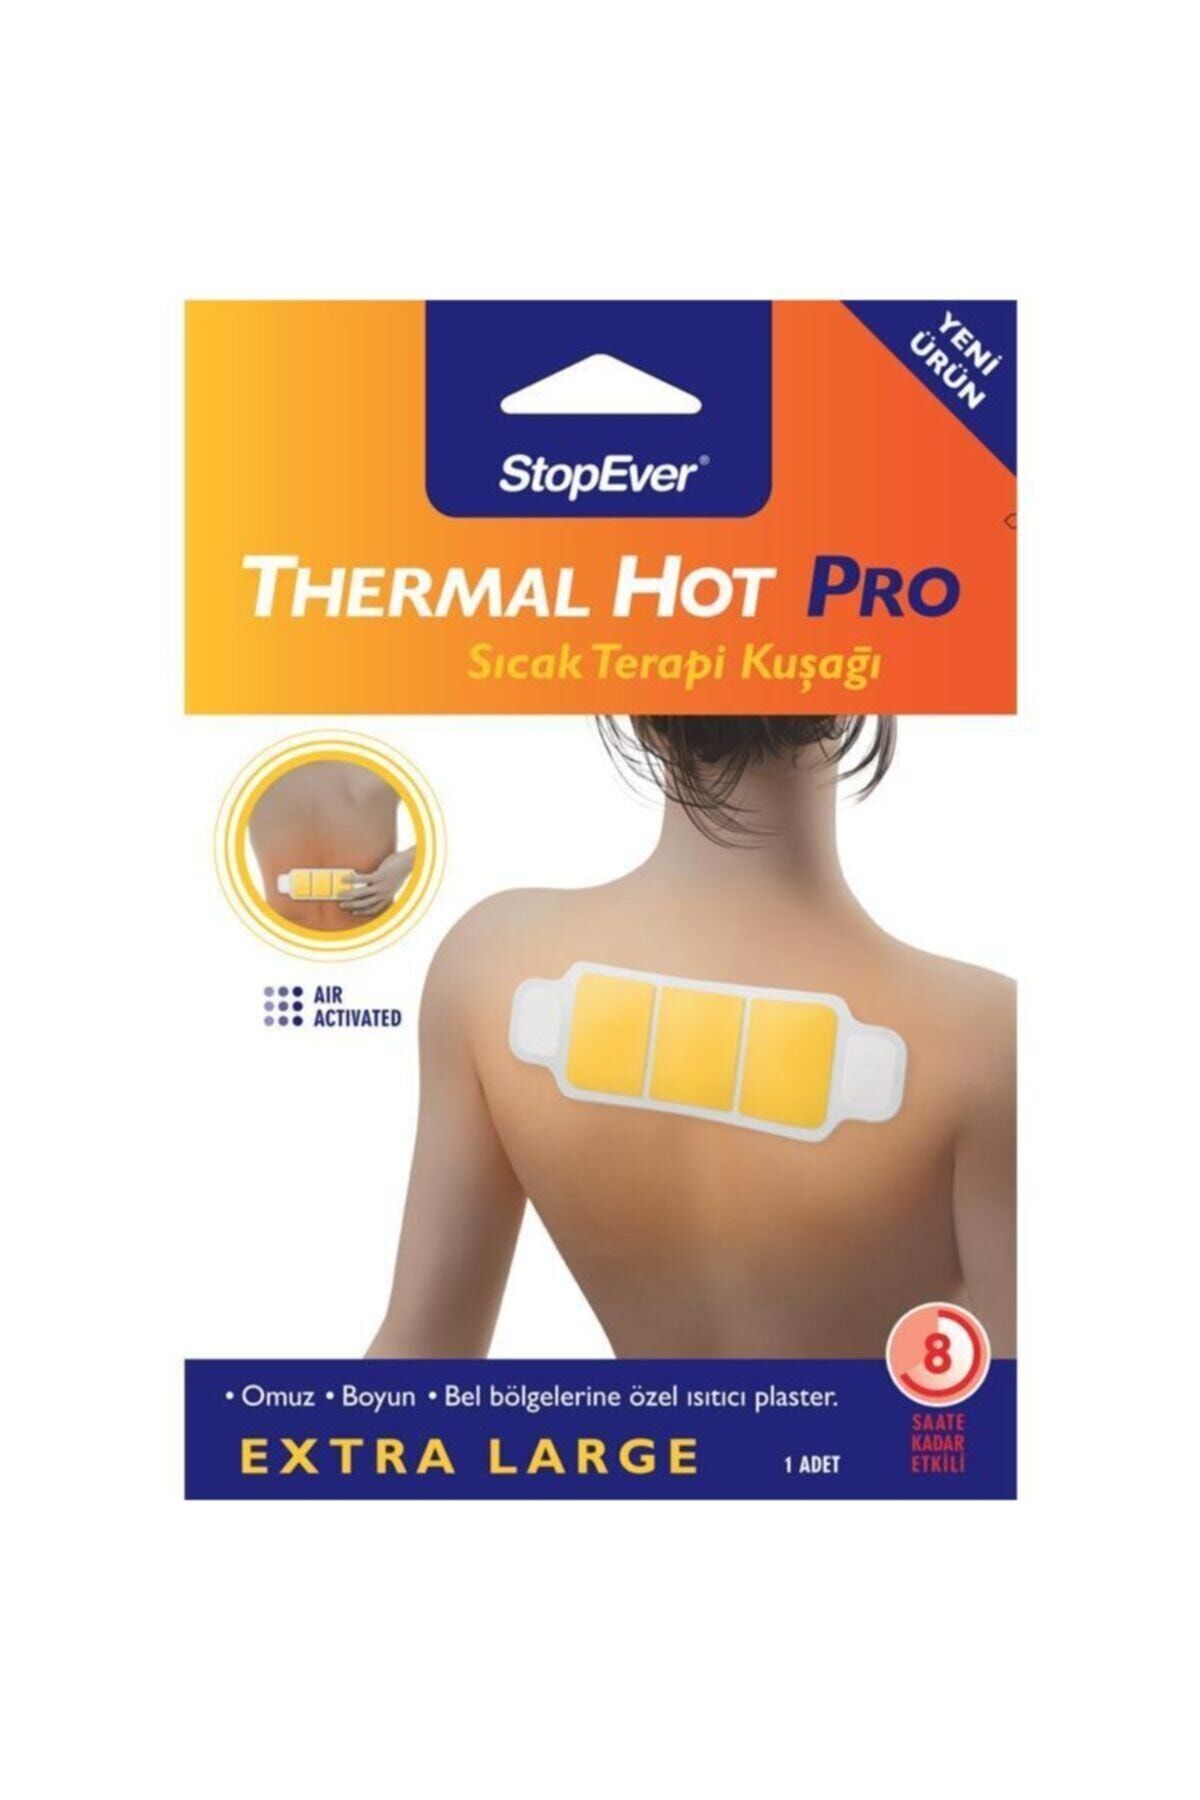 StopEver Thermal Hot Pro Sıcak Terapi Kuşağı